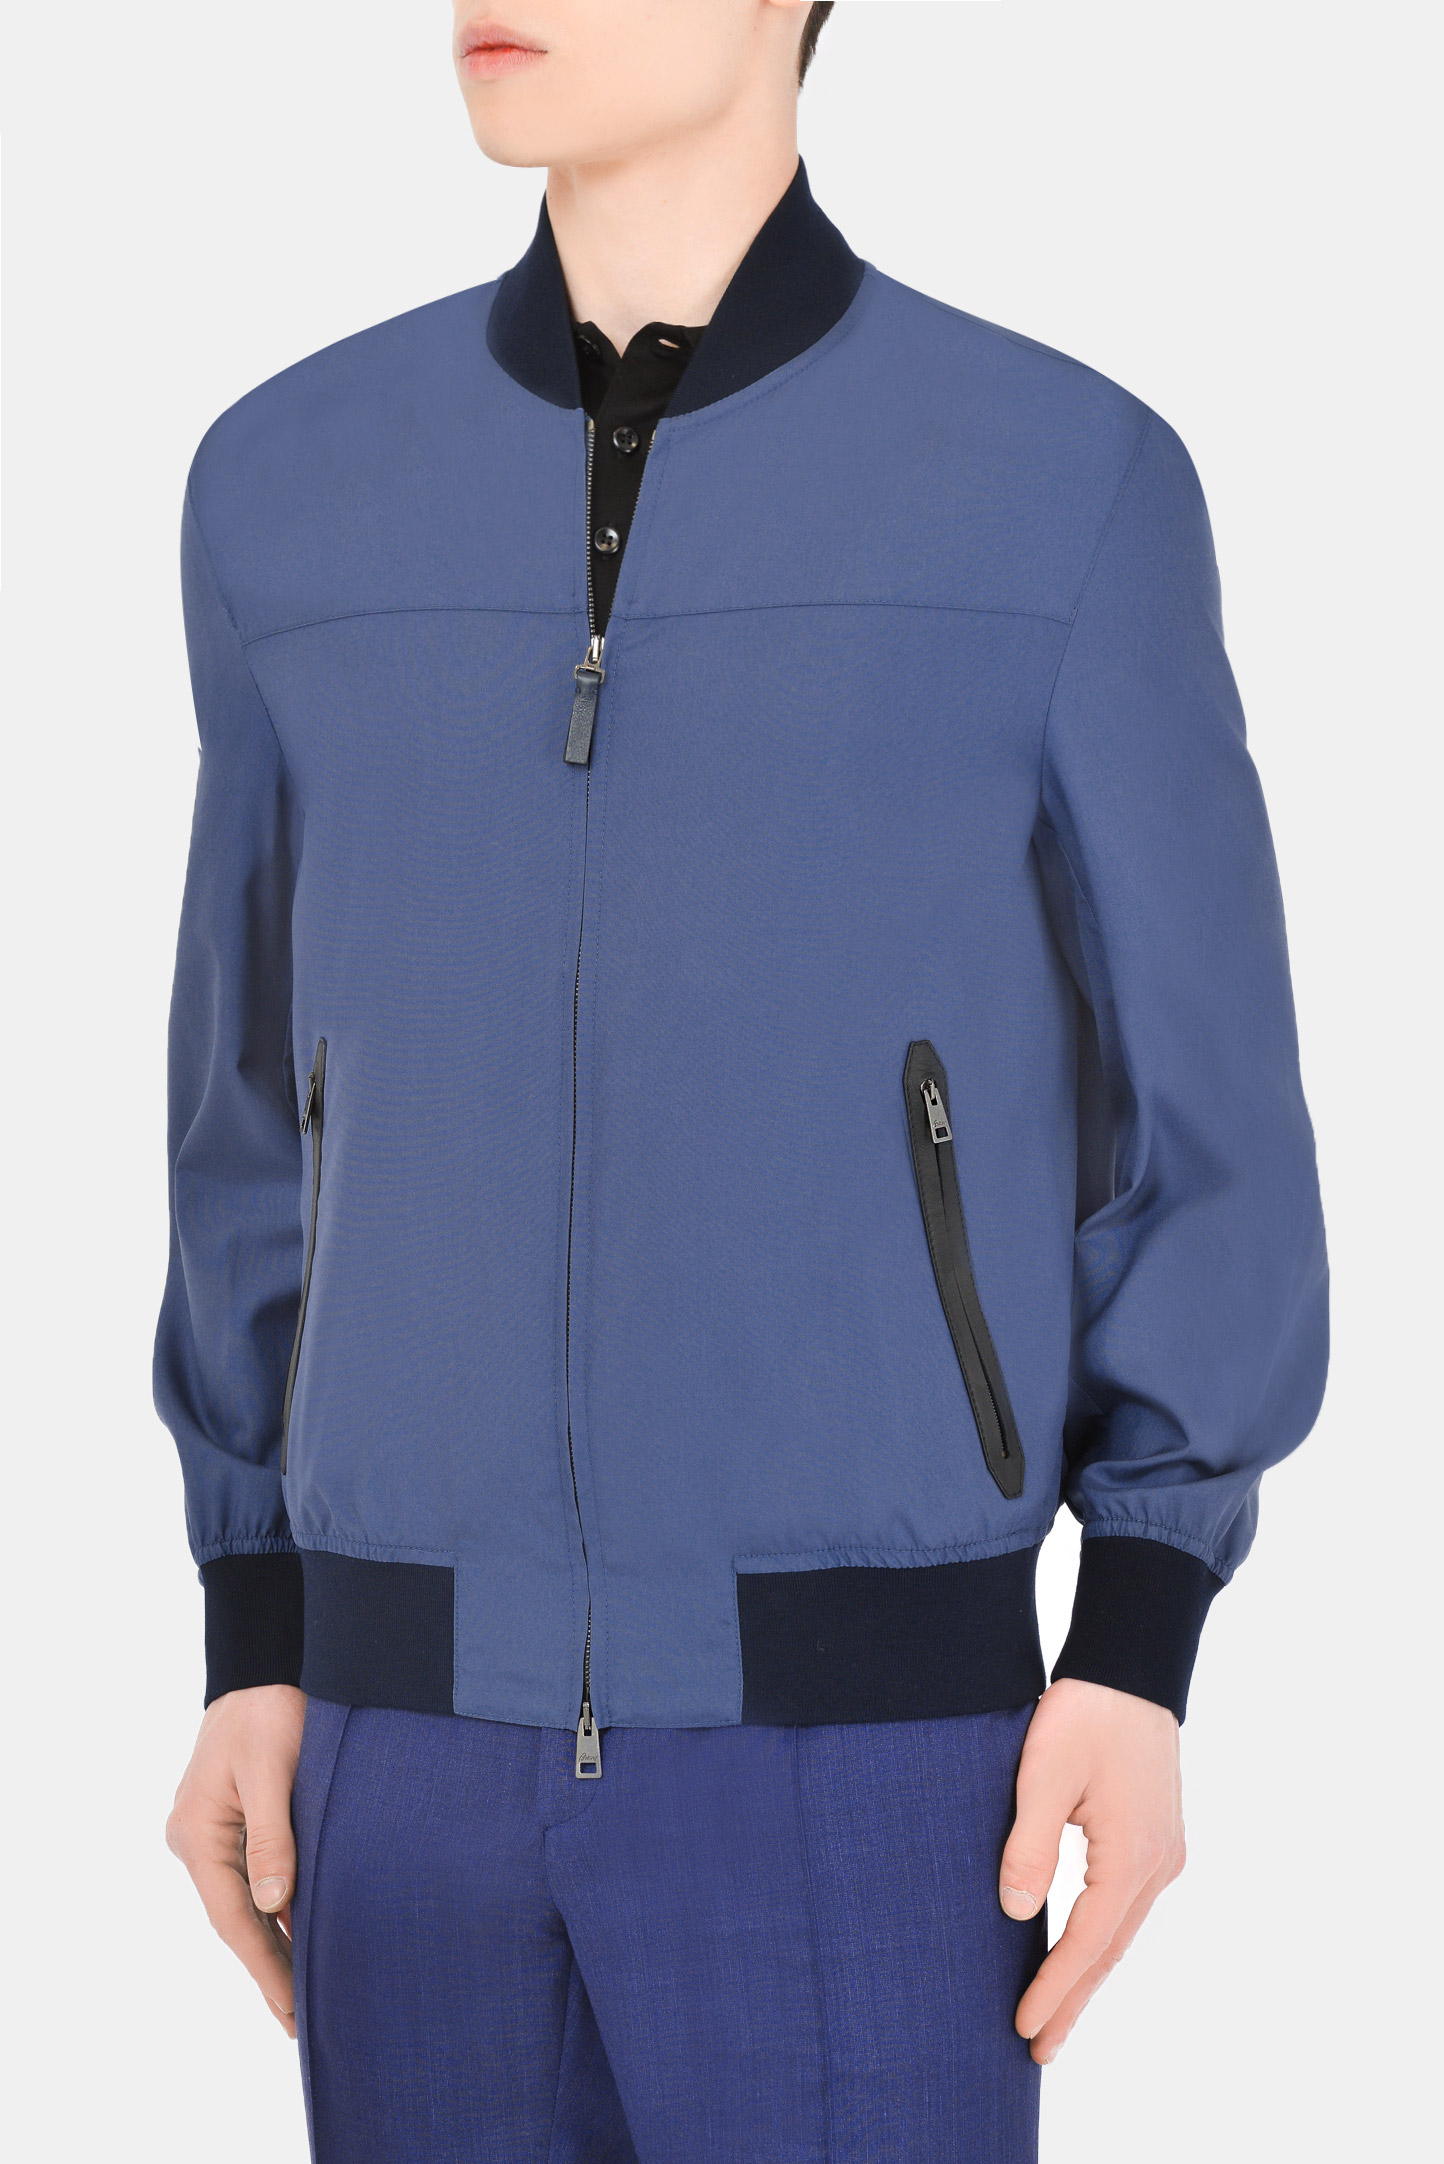 Куртка BRIONI SLRM0L P0410, цвет: Синий, Мужской